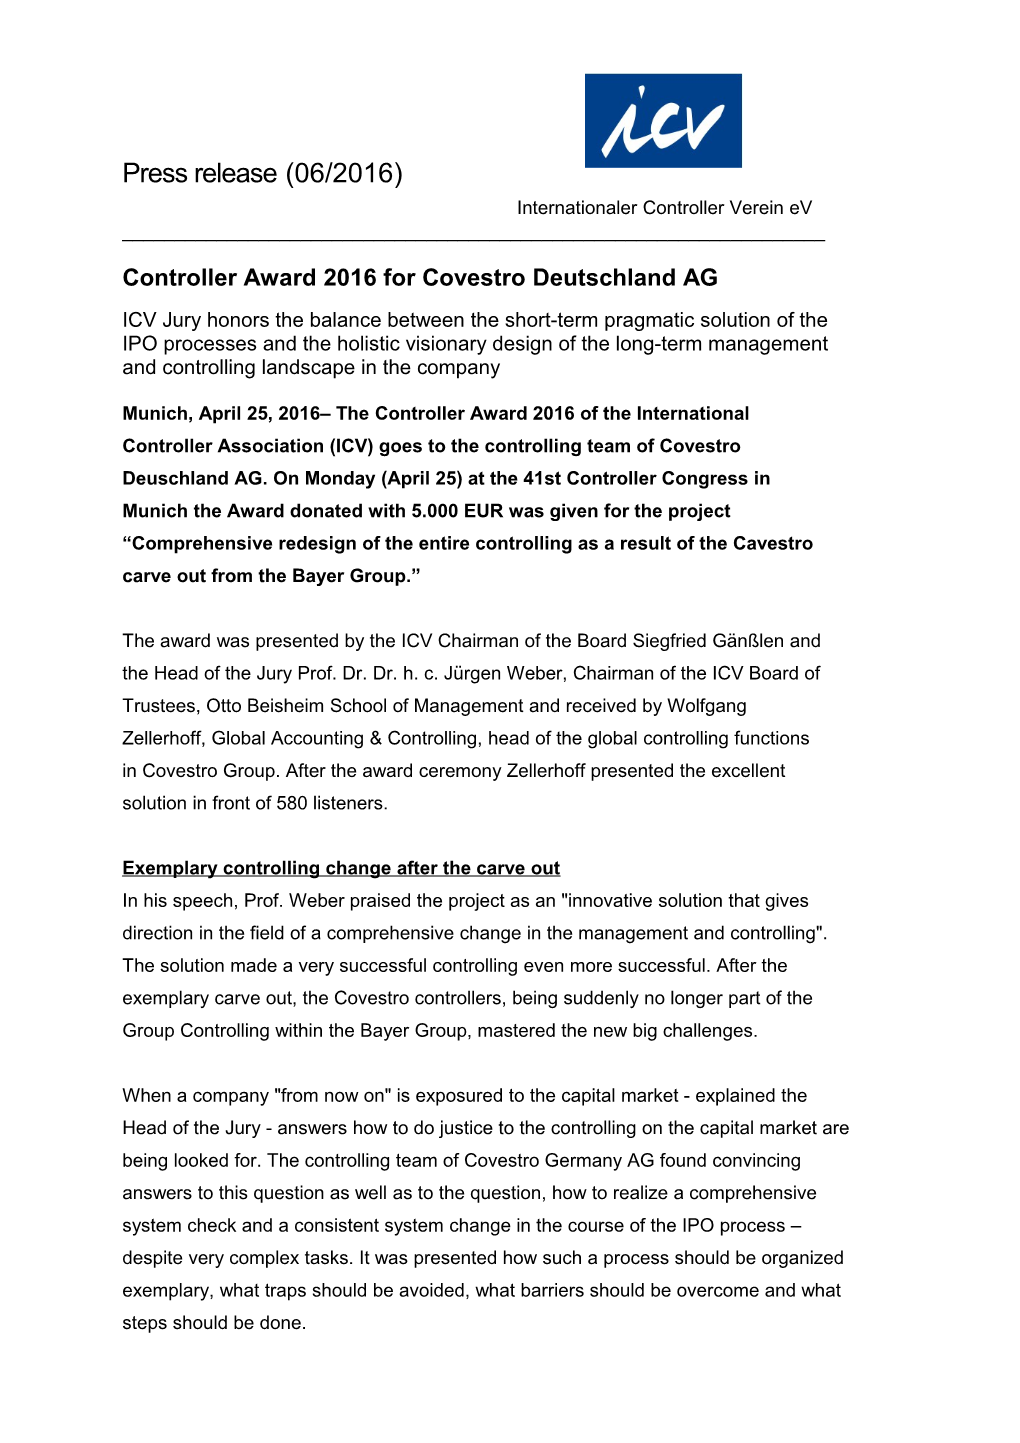 Controller Award 2016 for Covestro Deutschland AG